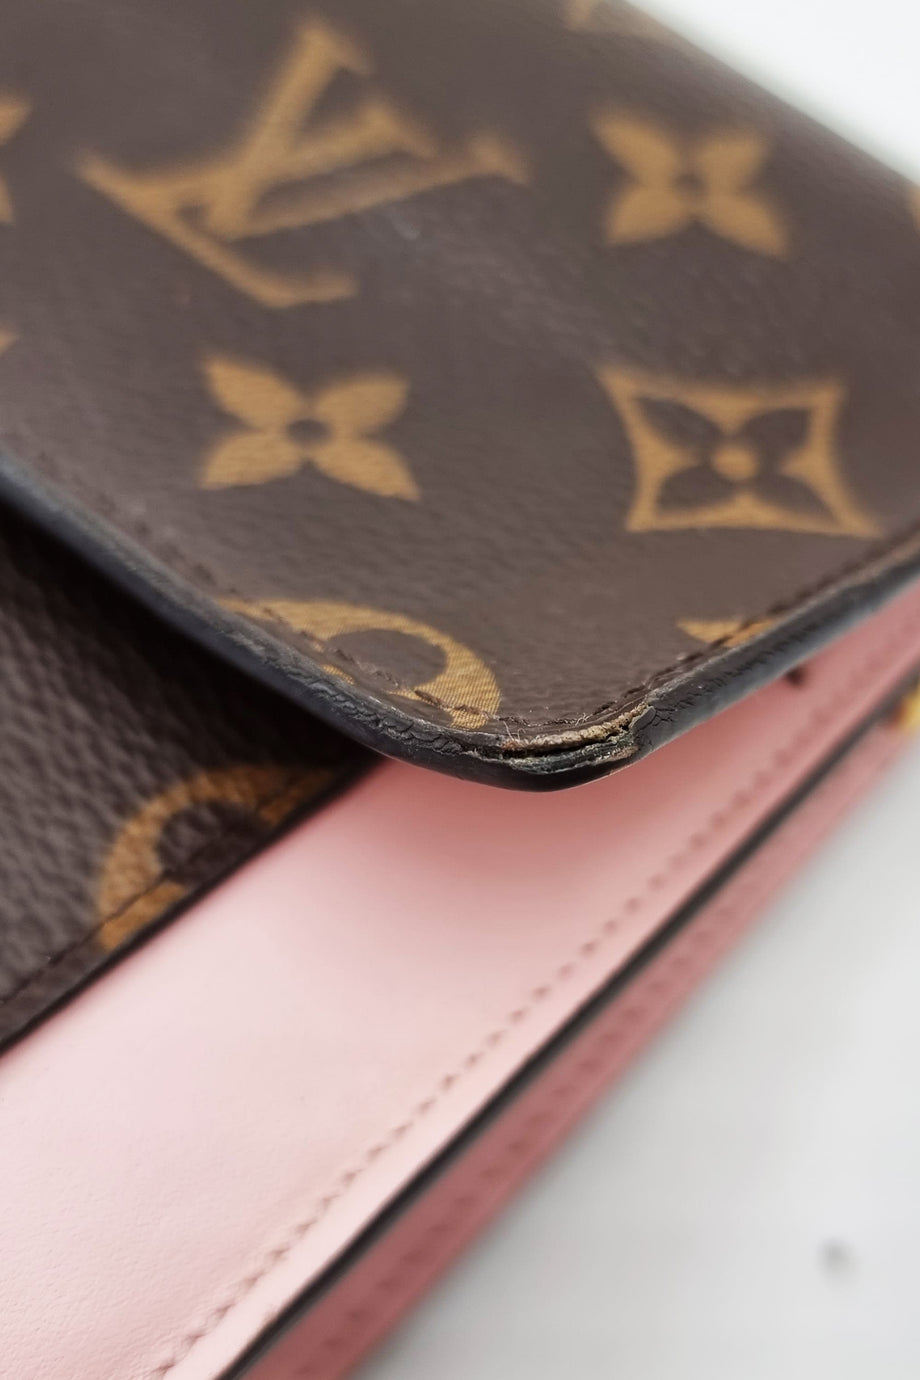 WGACA Louis Vuitton Monogram Flore Compact Wallet - Brown – Kith